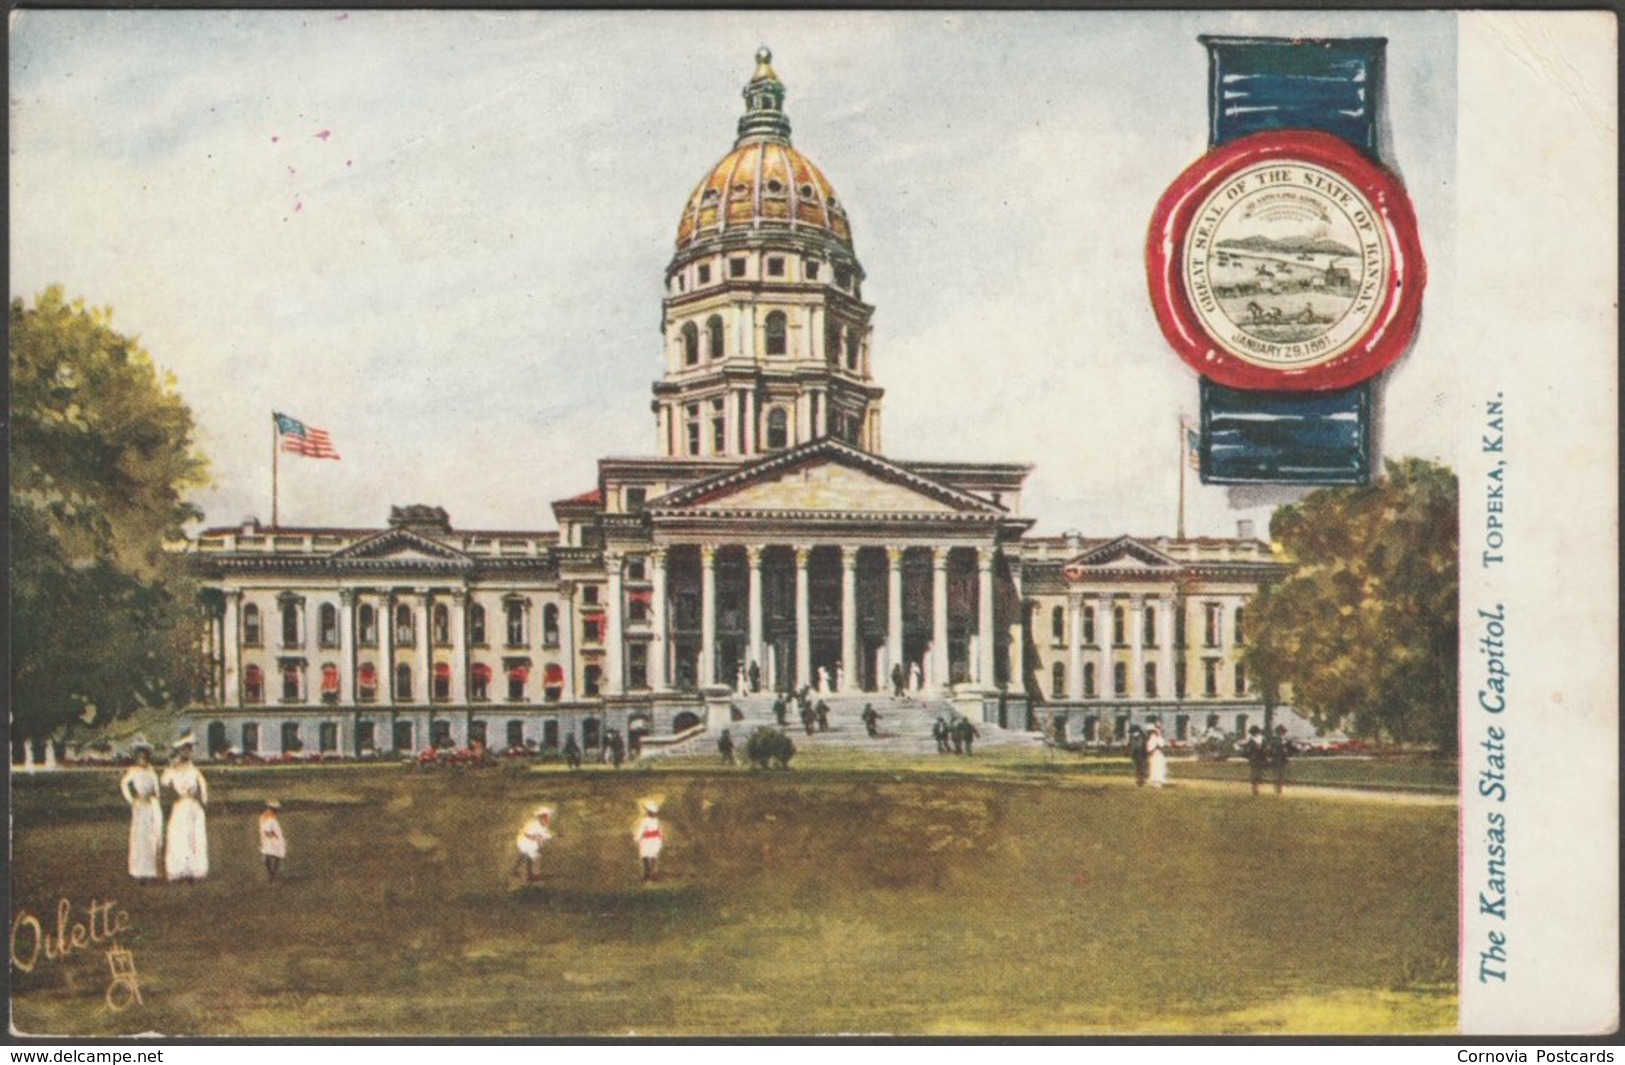 State Capitol, Topeka, Kansas, C.1905-10 - Tuck's Oilette Postcard - Topeka